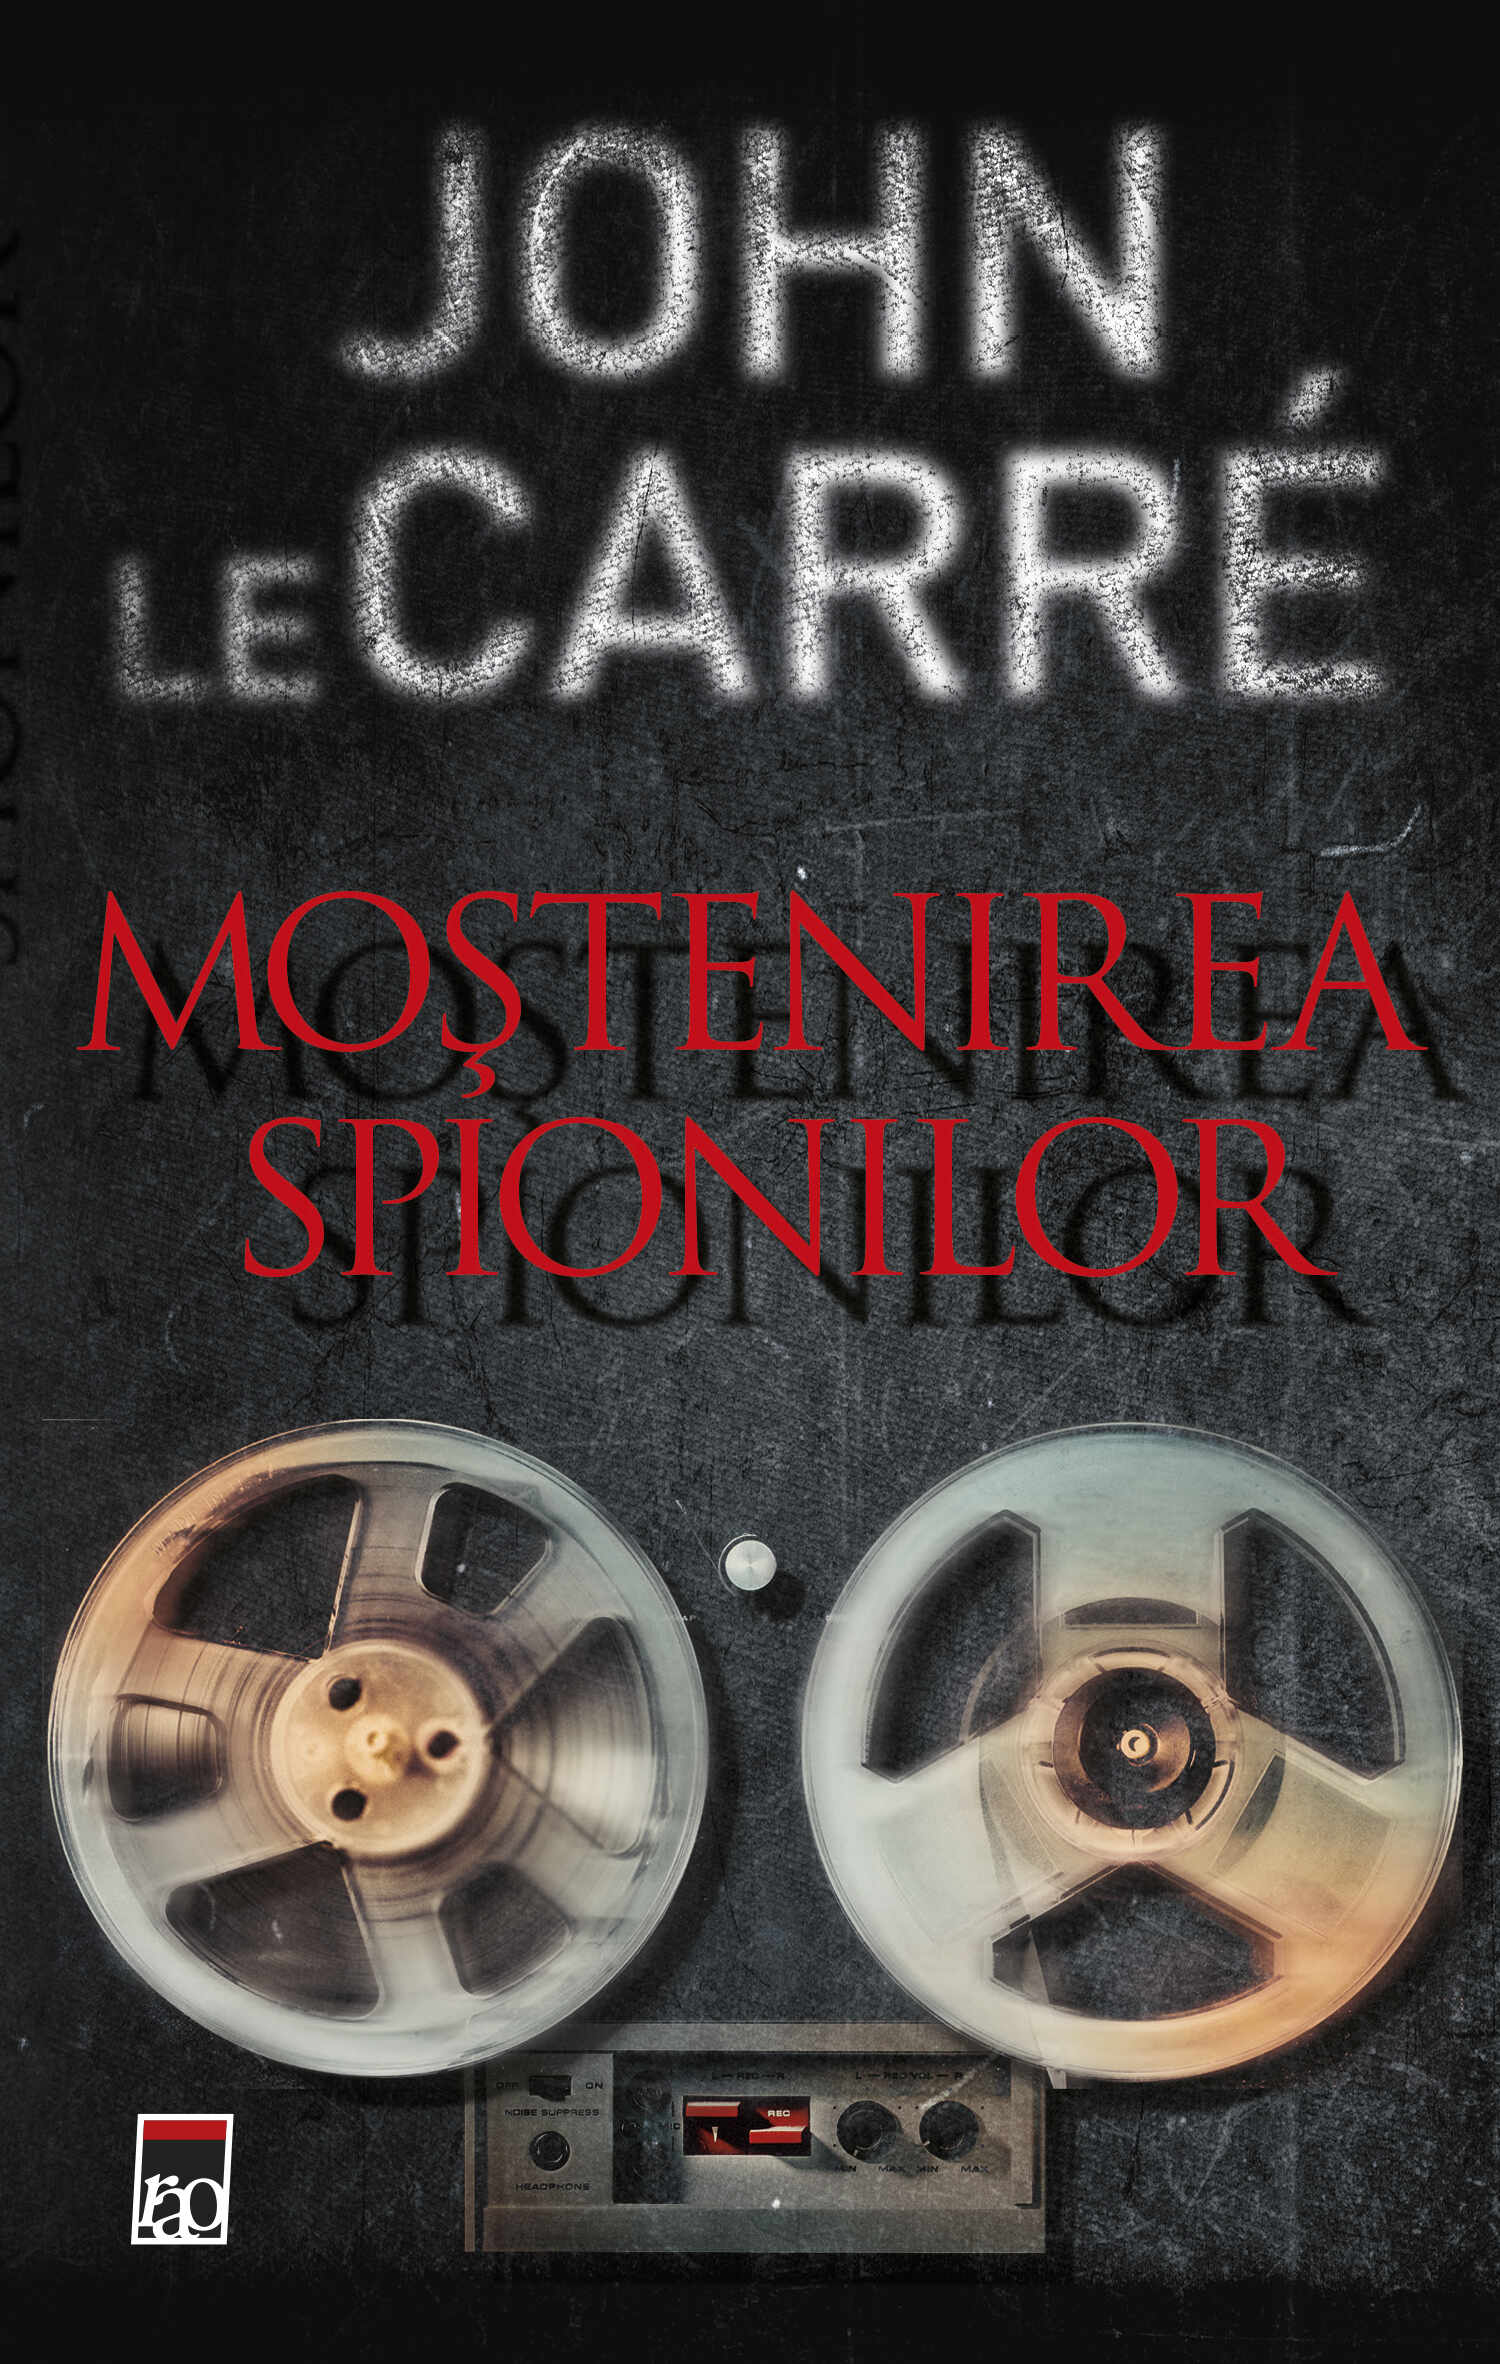 Mostenirea spionilor | John le Carre